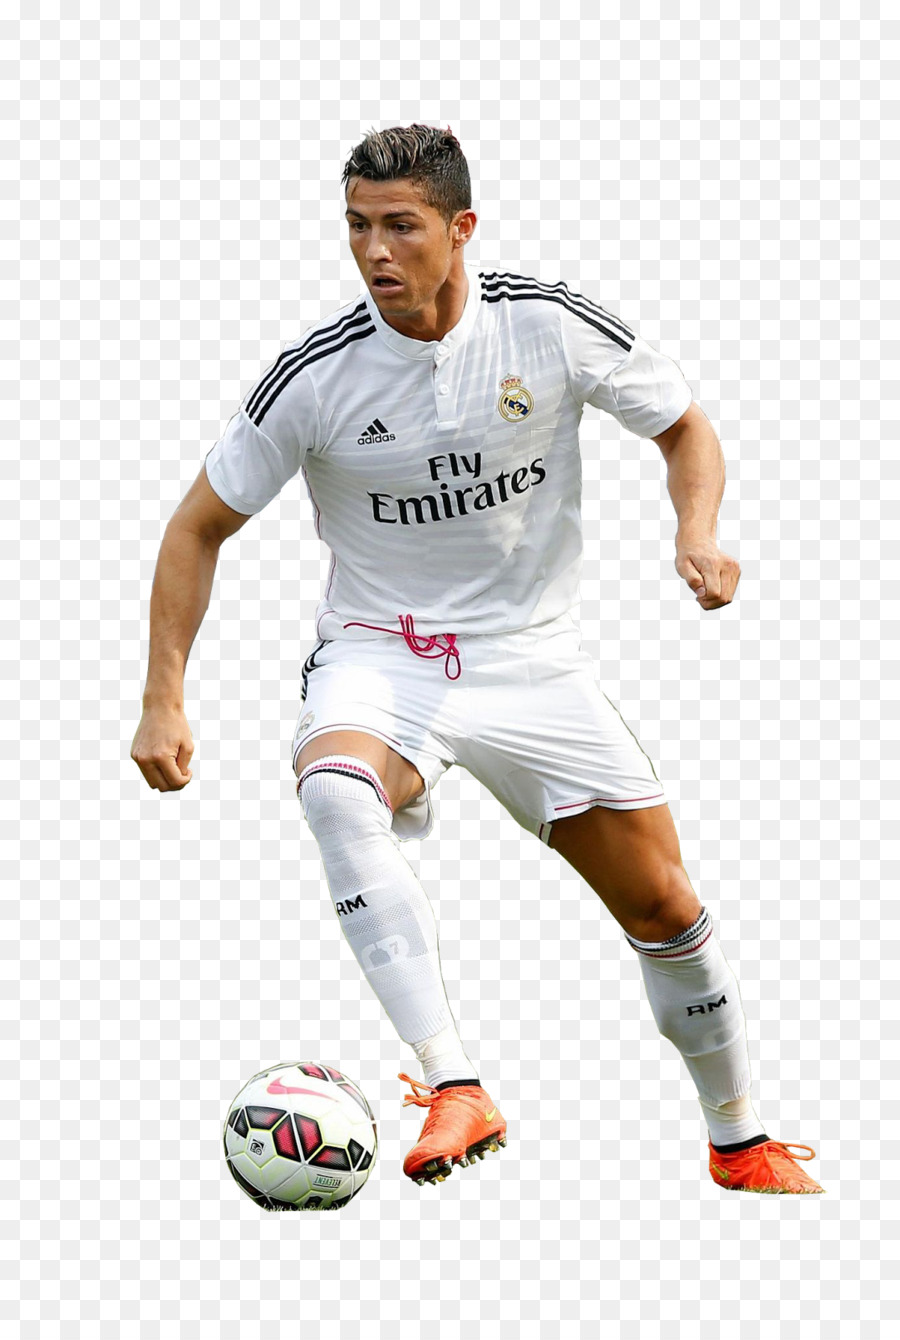 Cristiano Ronaldo, Real Madrid C. F., Manchester United F. C. Portugal national football team, FIFA 18 - Cristiano Ronaldo